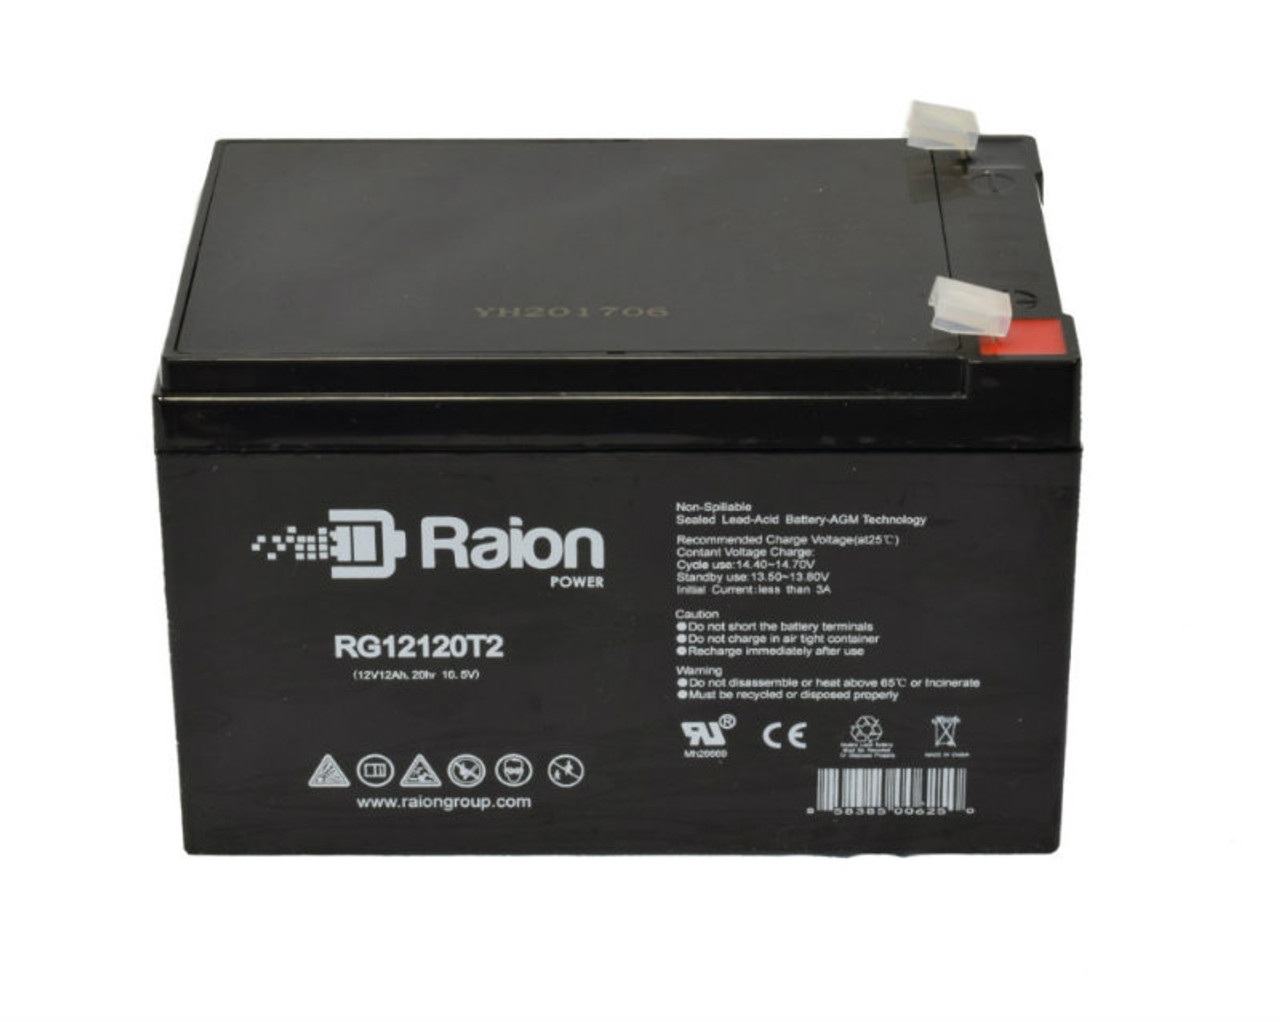 Raion Power RG12120T2 SLA Battery for Rascal 370 Fold & G (2)